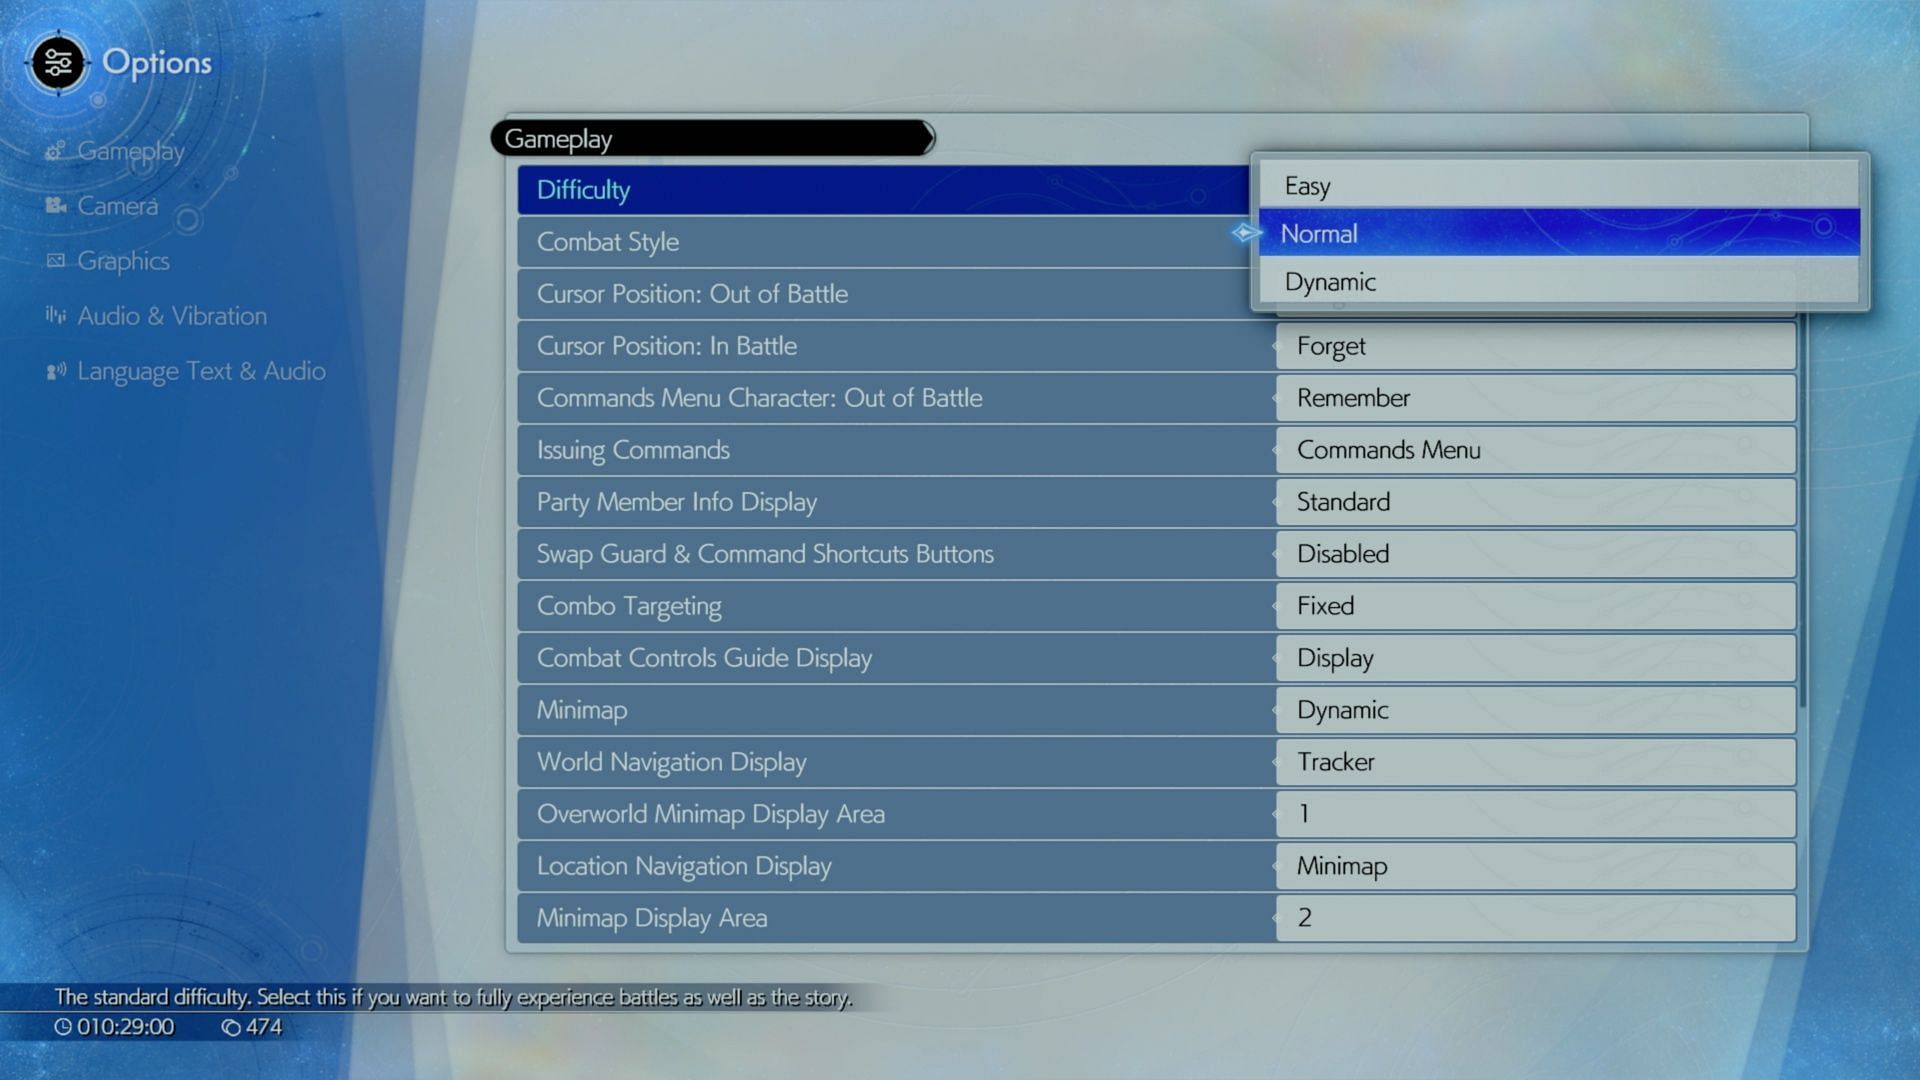 The default options you have available (Image via Square Enix)